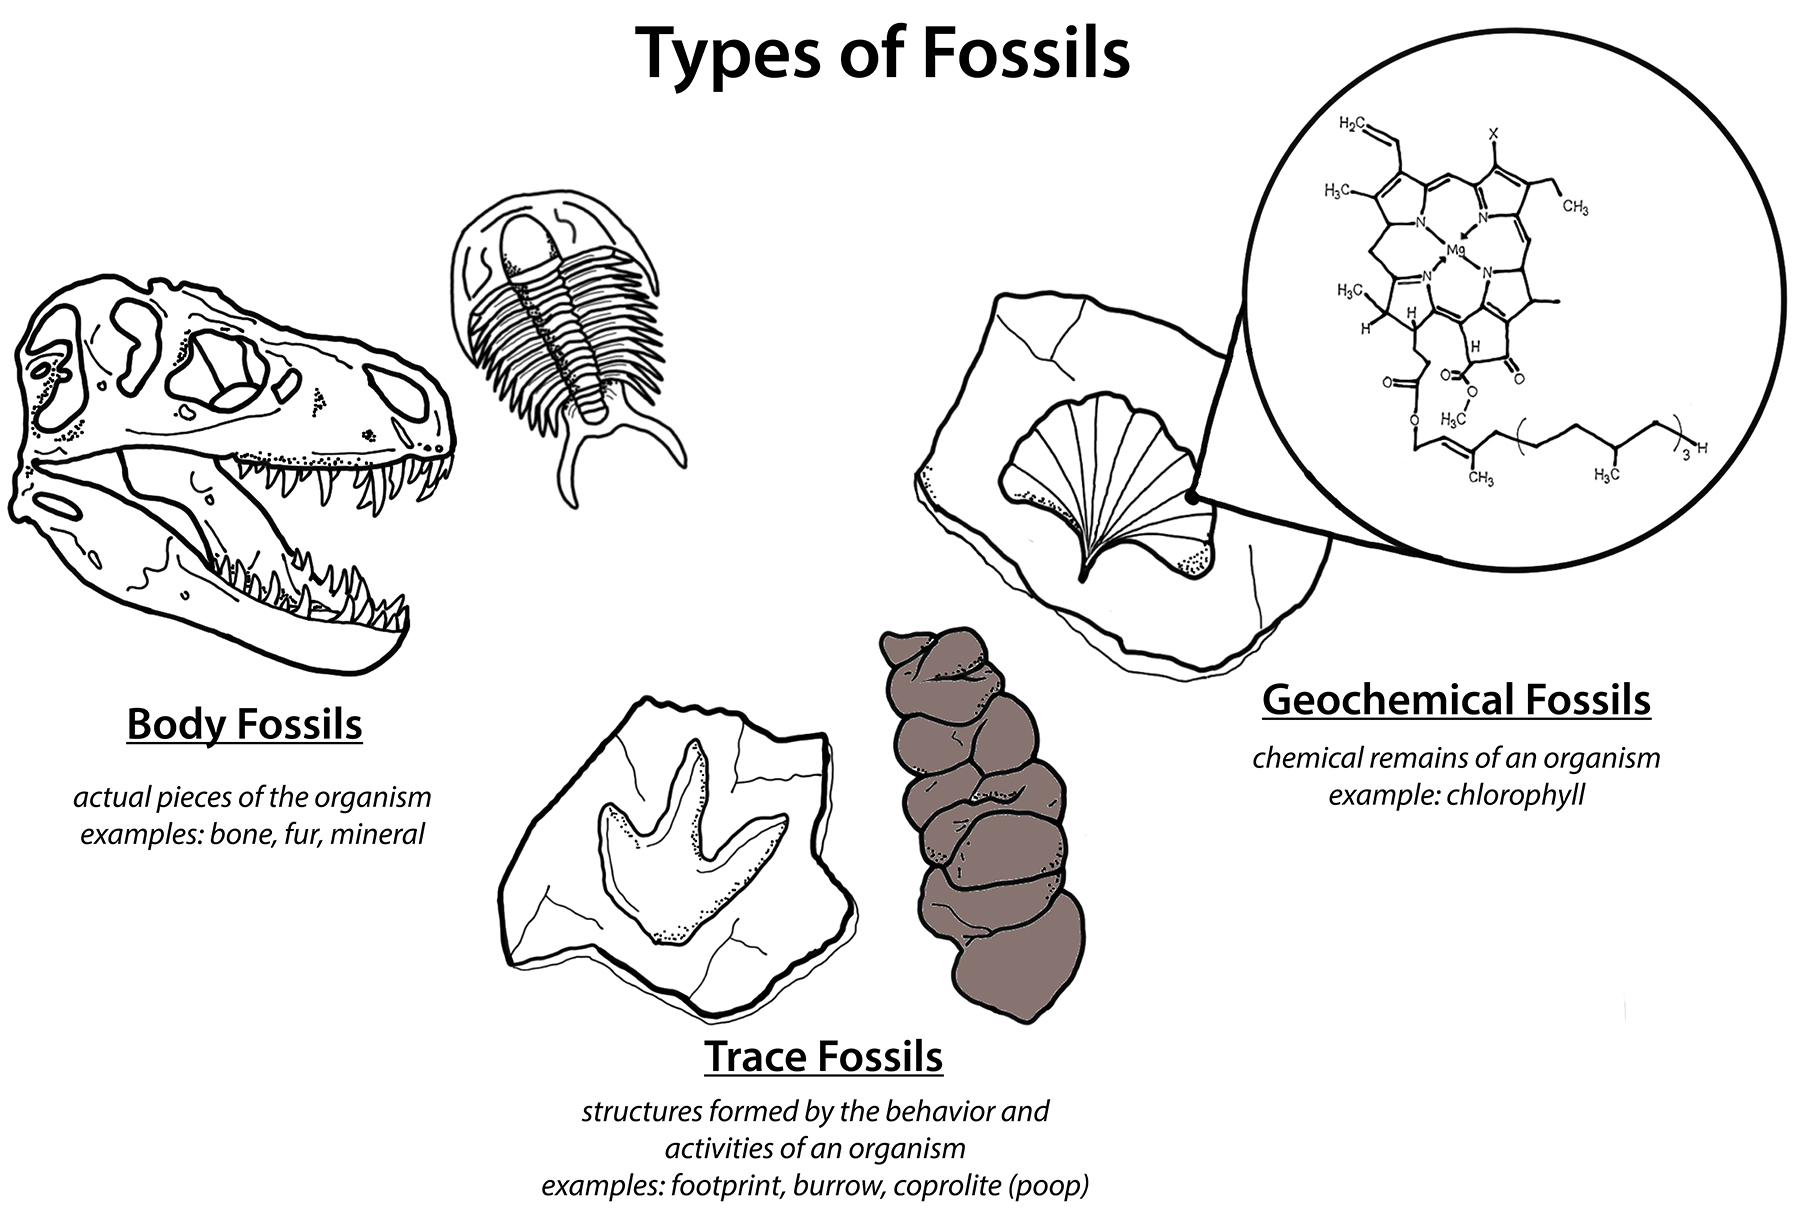 Types of Fossils.jpg